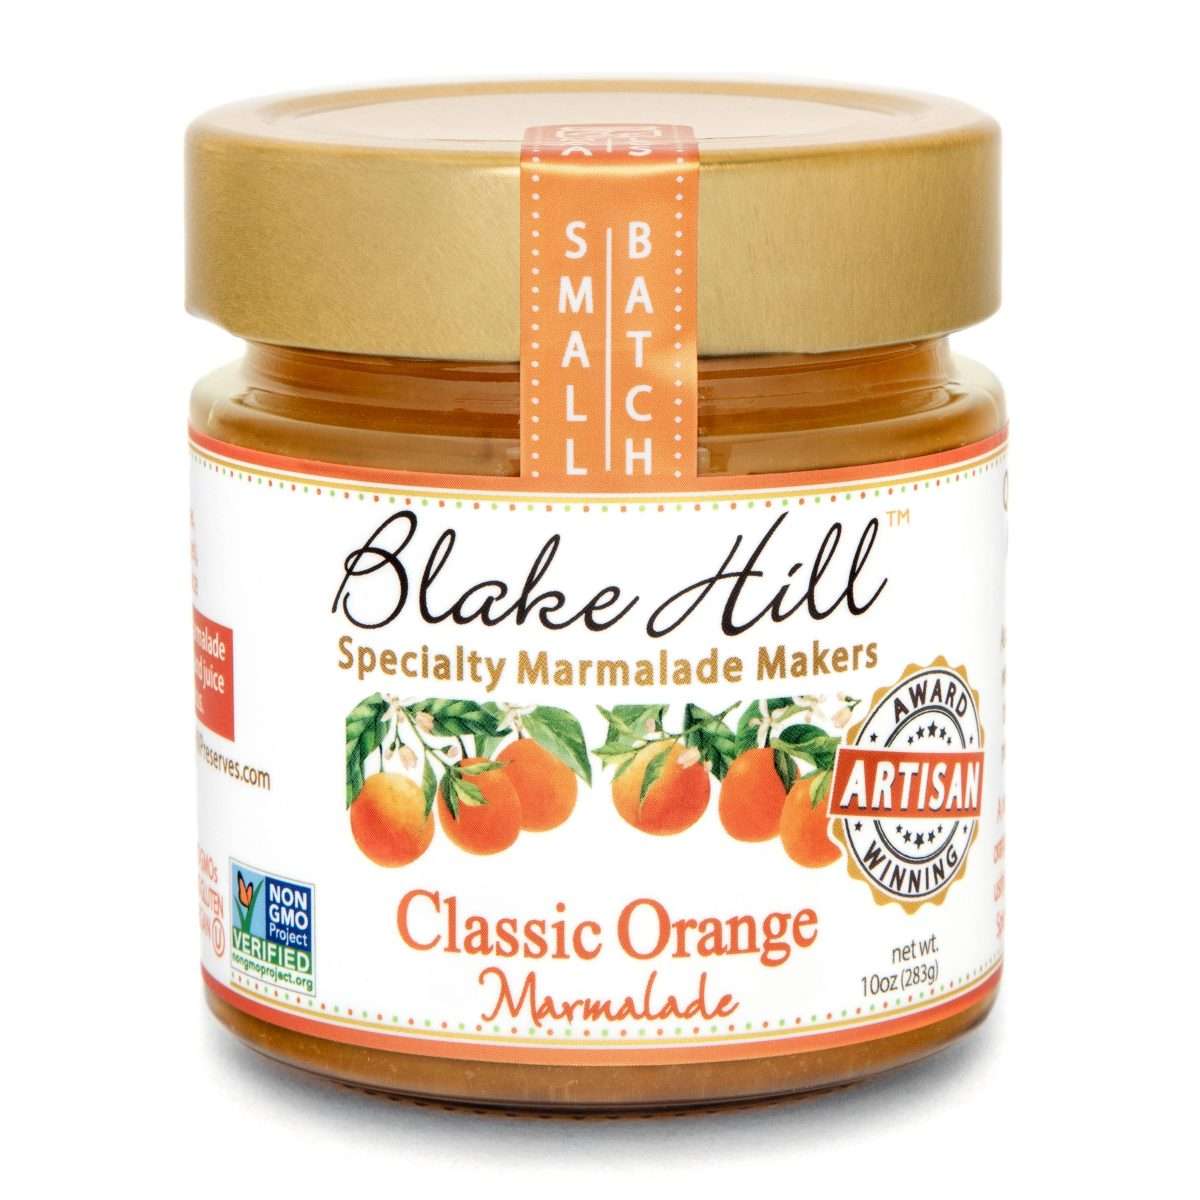 Blake Hill Preserves Classic Orange Marmalade in a glass jar.